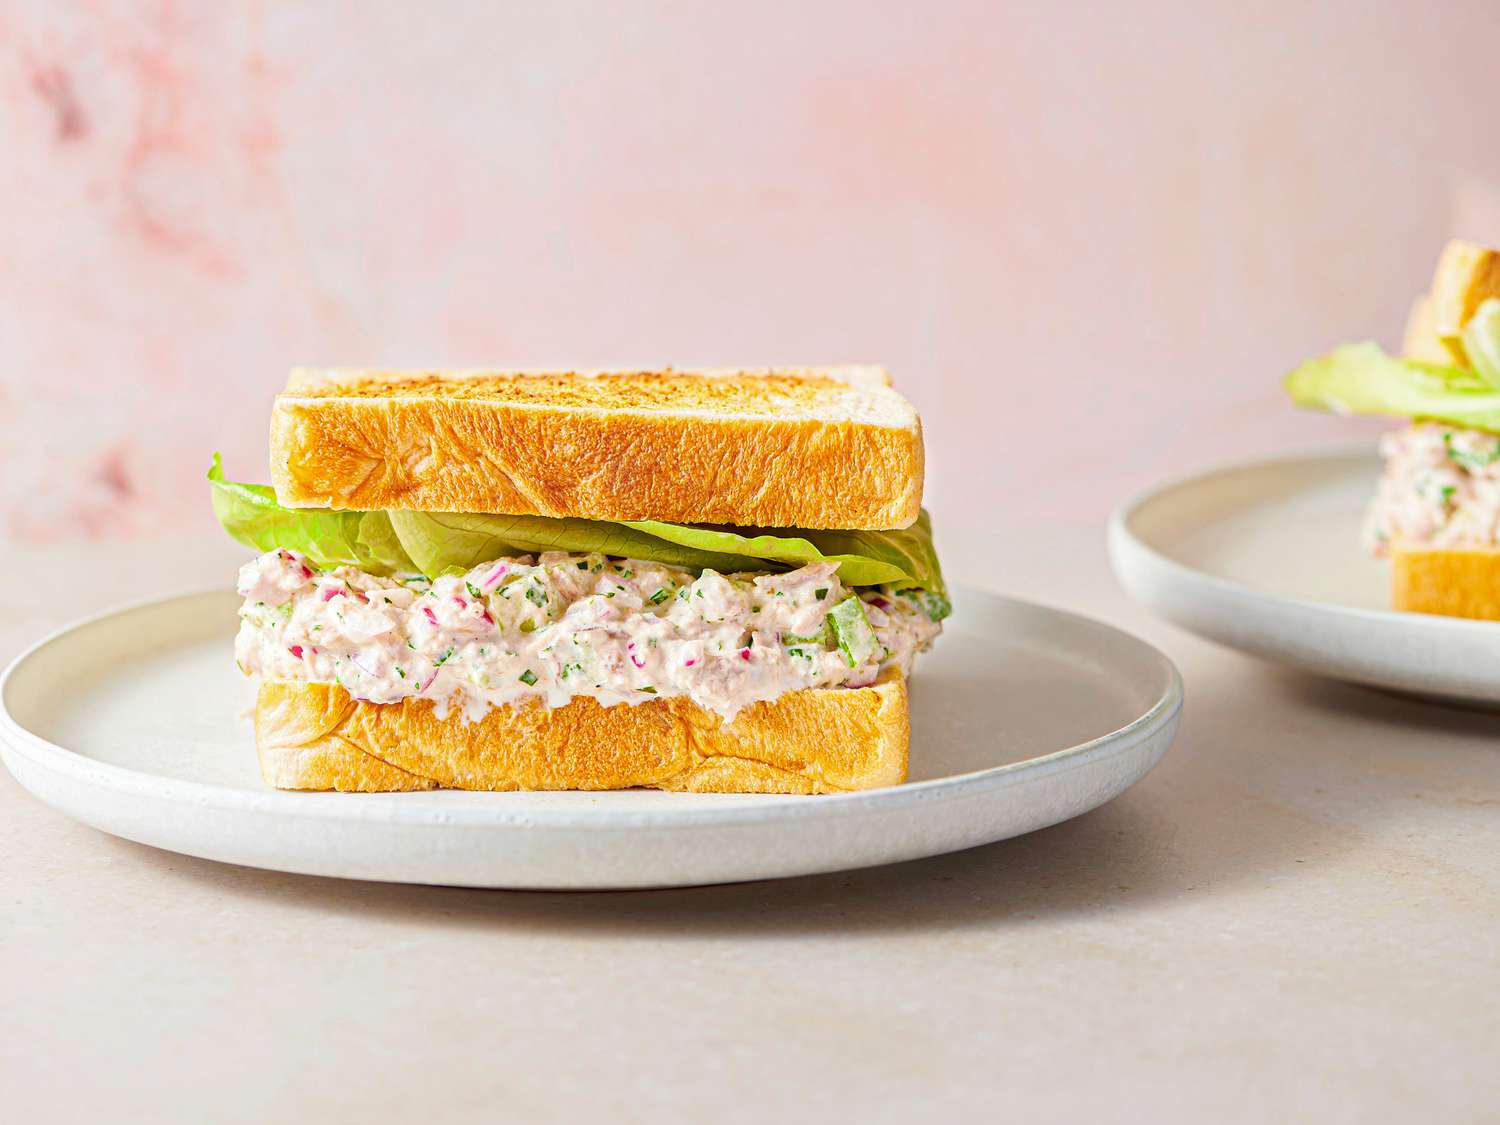 Tuna salad sandwich served on a plate